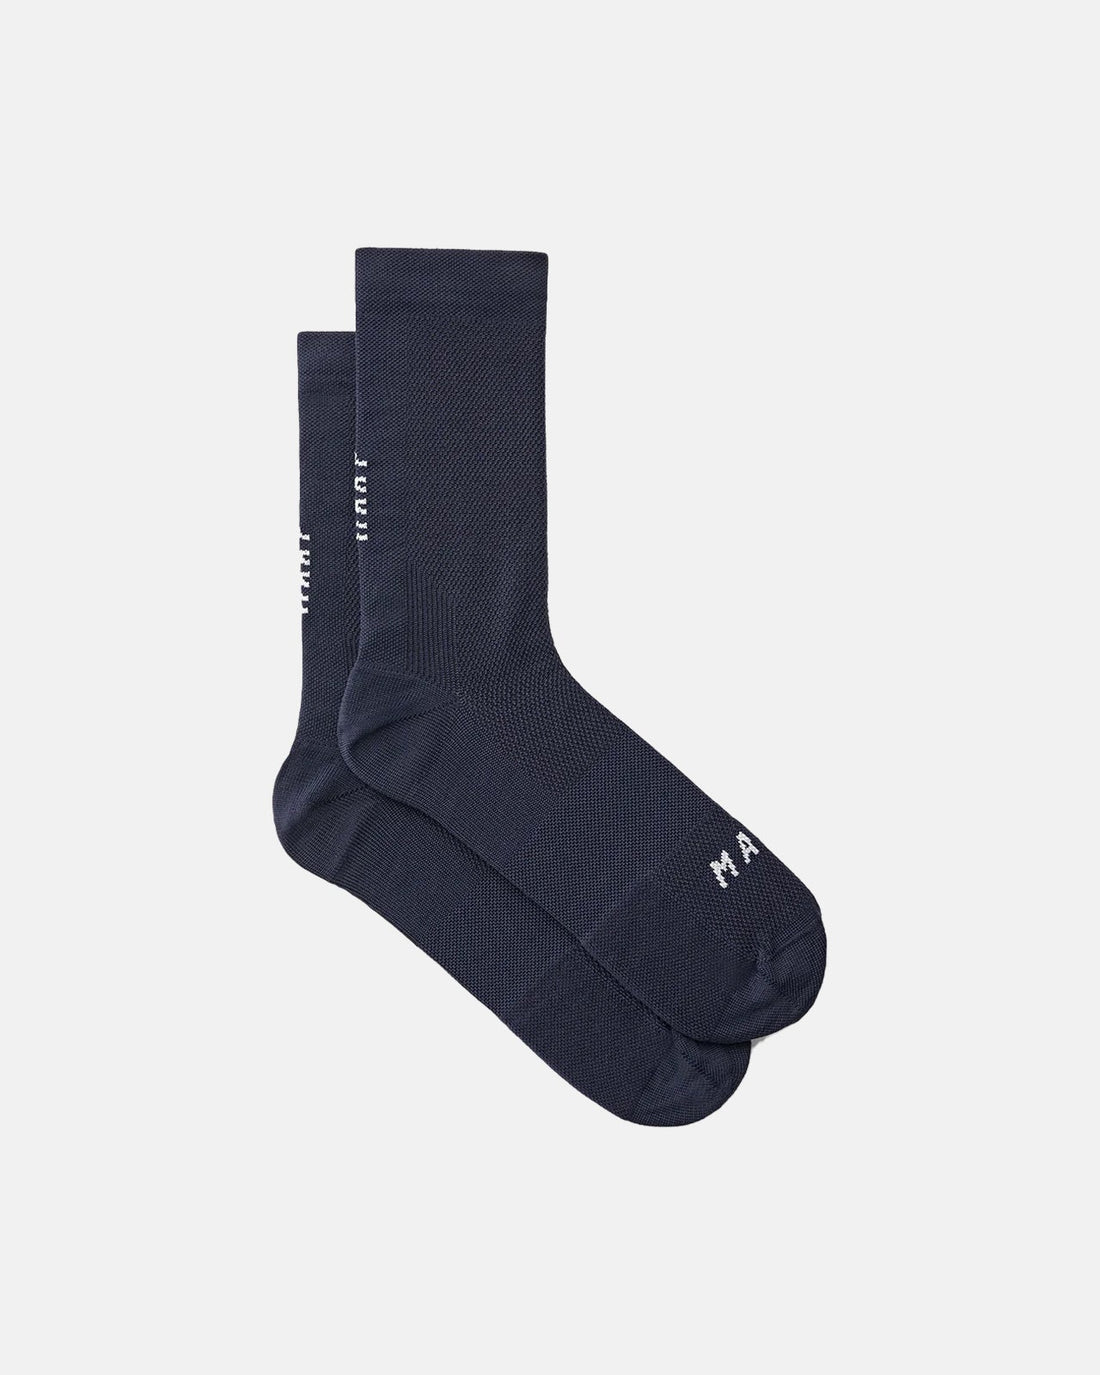 MAAP Division Sock - Navy/Navy